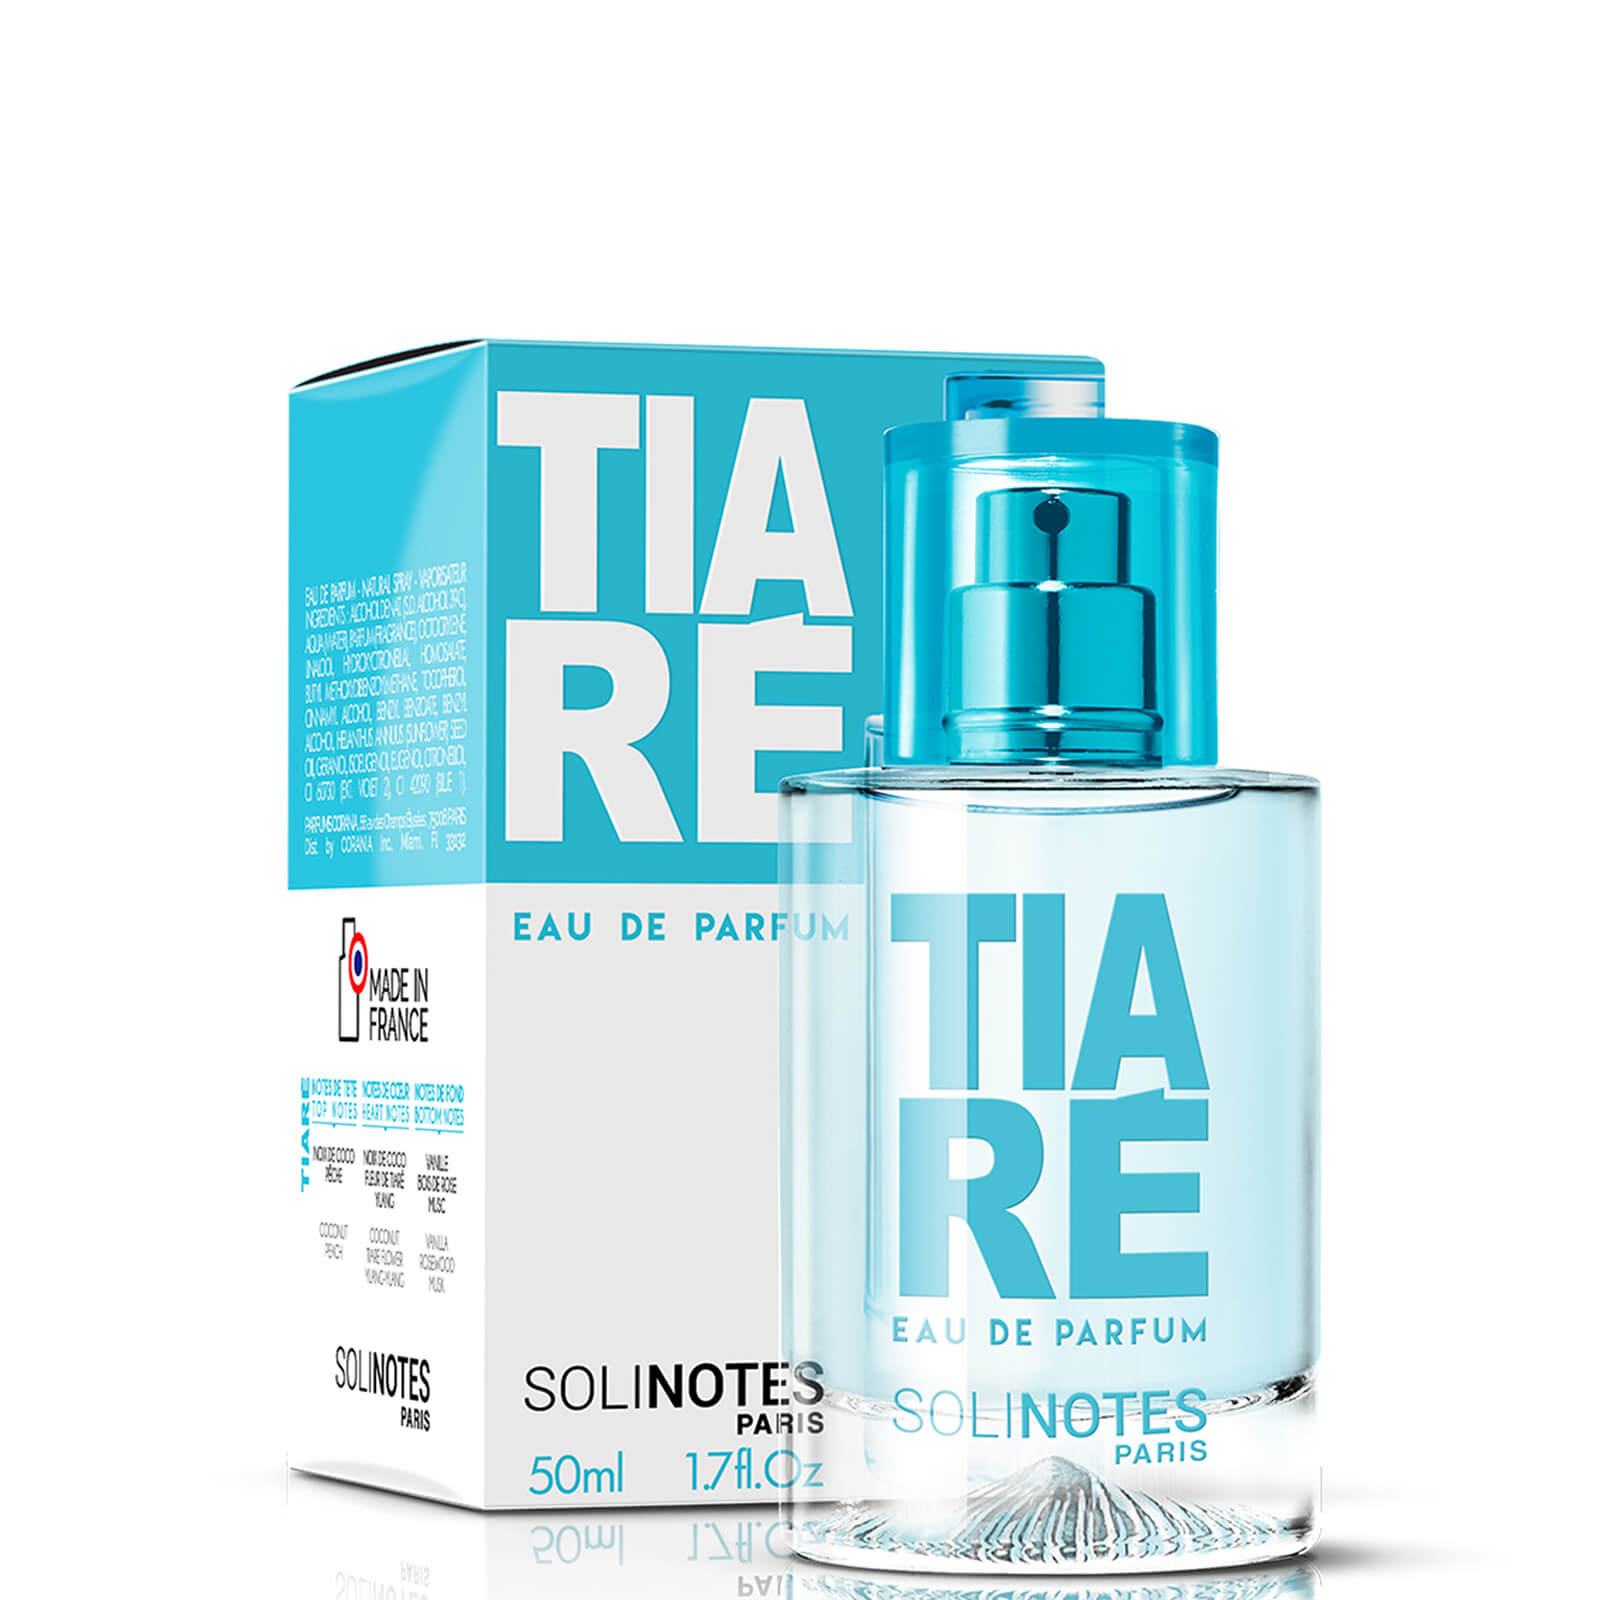 Solinotes Eau De Parfum - Tiare 1.7 oz